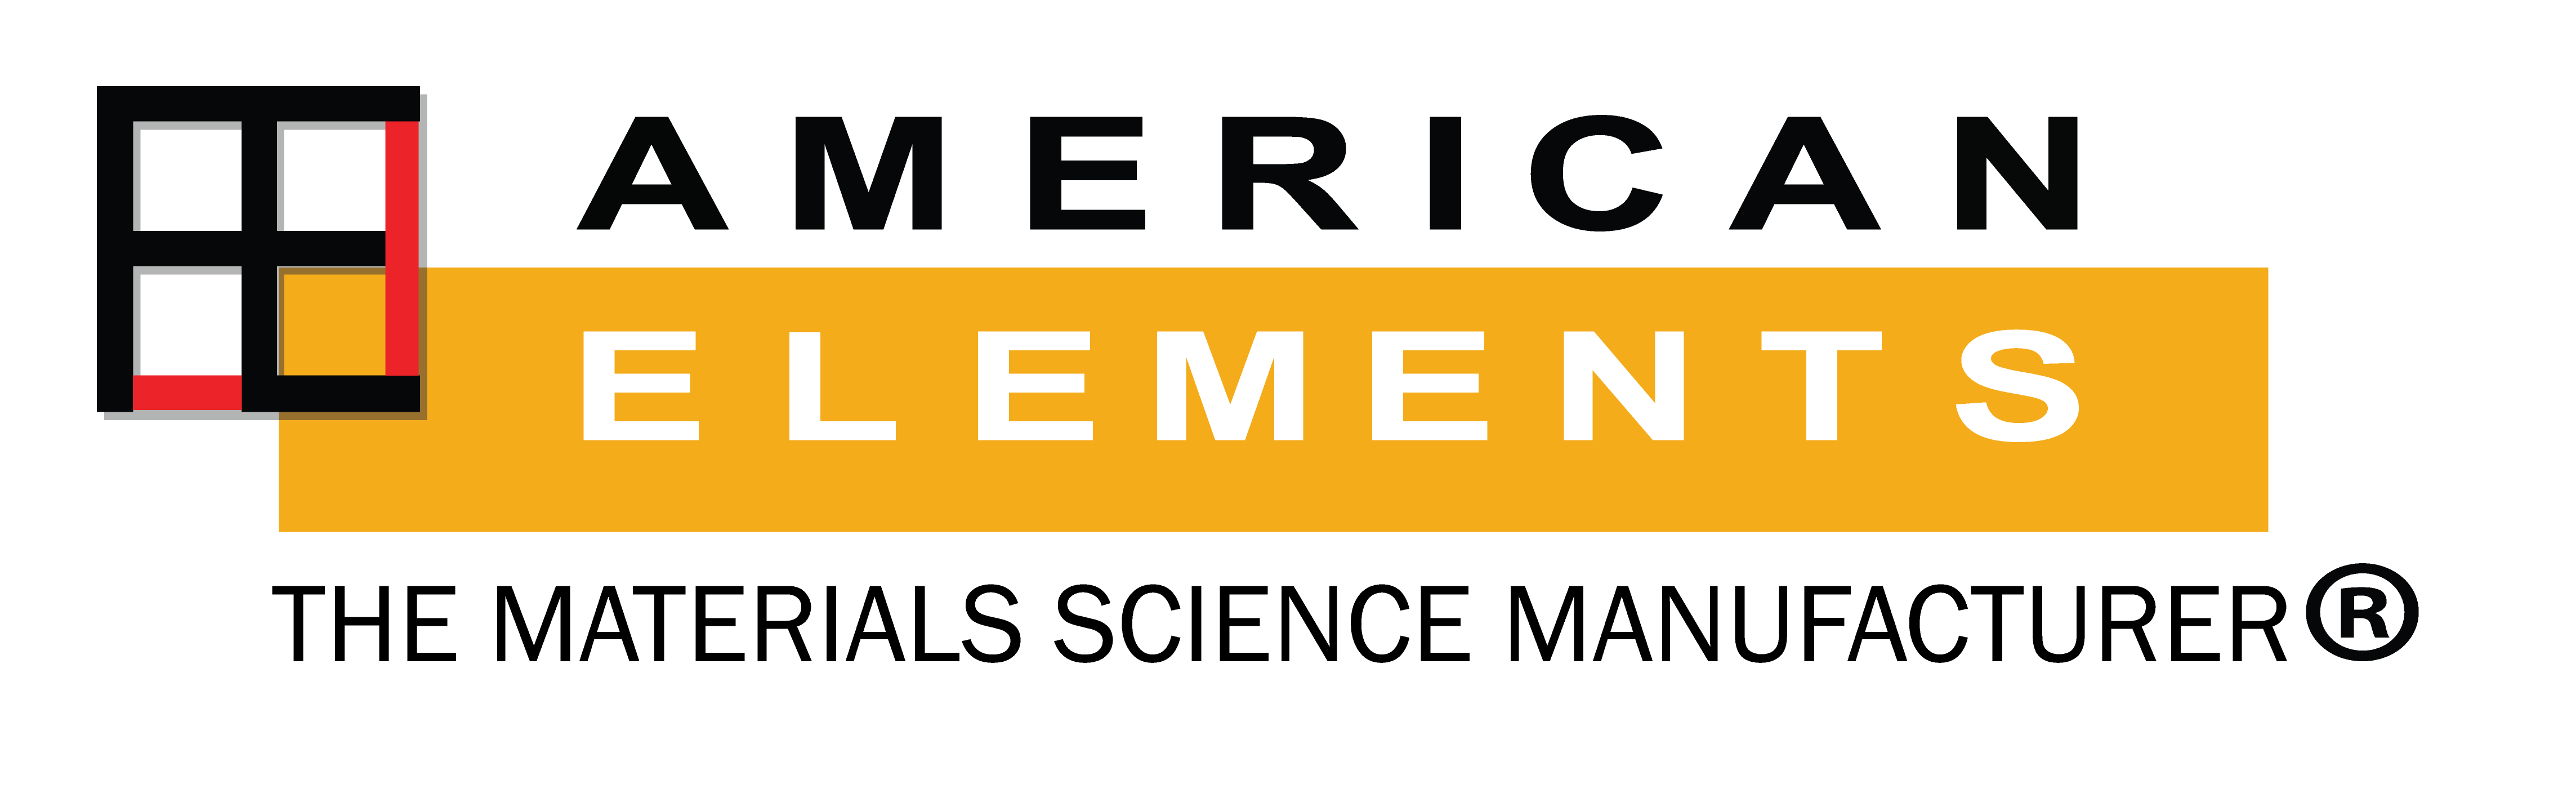 American Elements